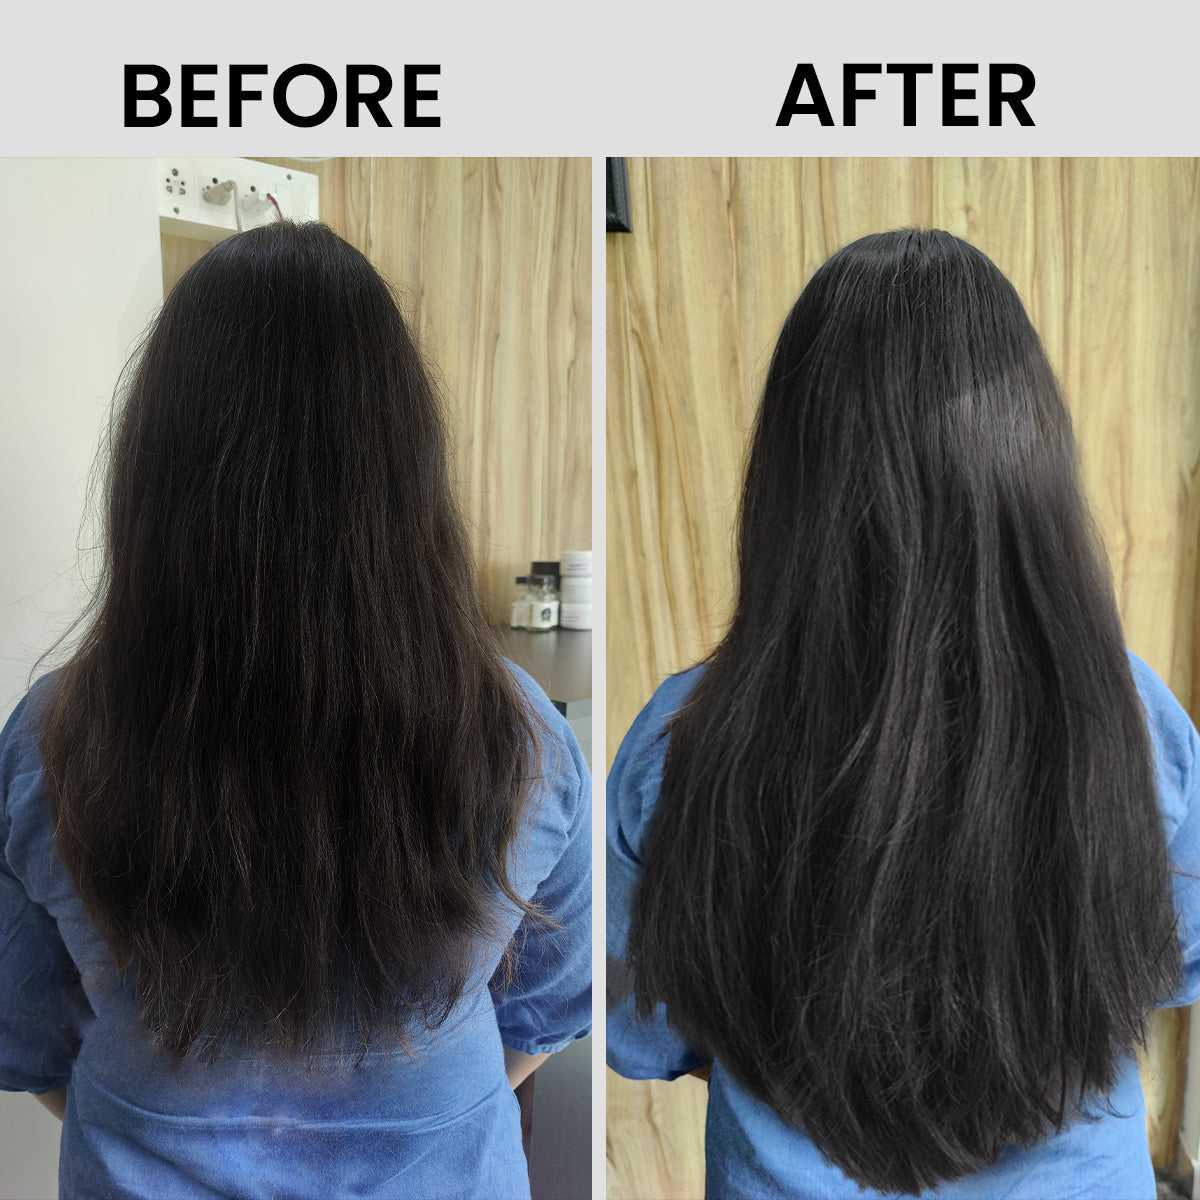 Tru Hair Ayurvedic Hair Oil Refill pack + Biotin Shampoo & Conditioner | For Dandruff, Pre Mature Greying, Hair Growth & Shiny Voluminous Hair